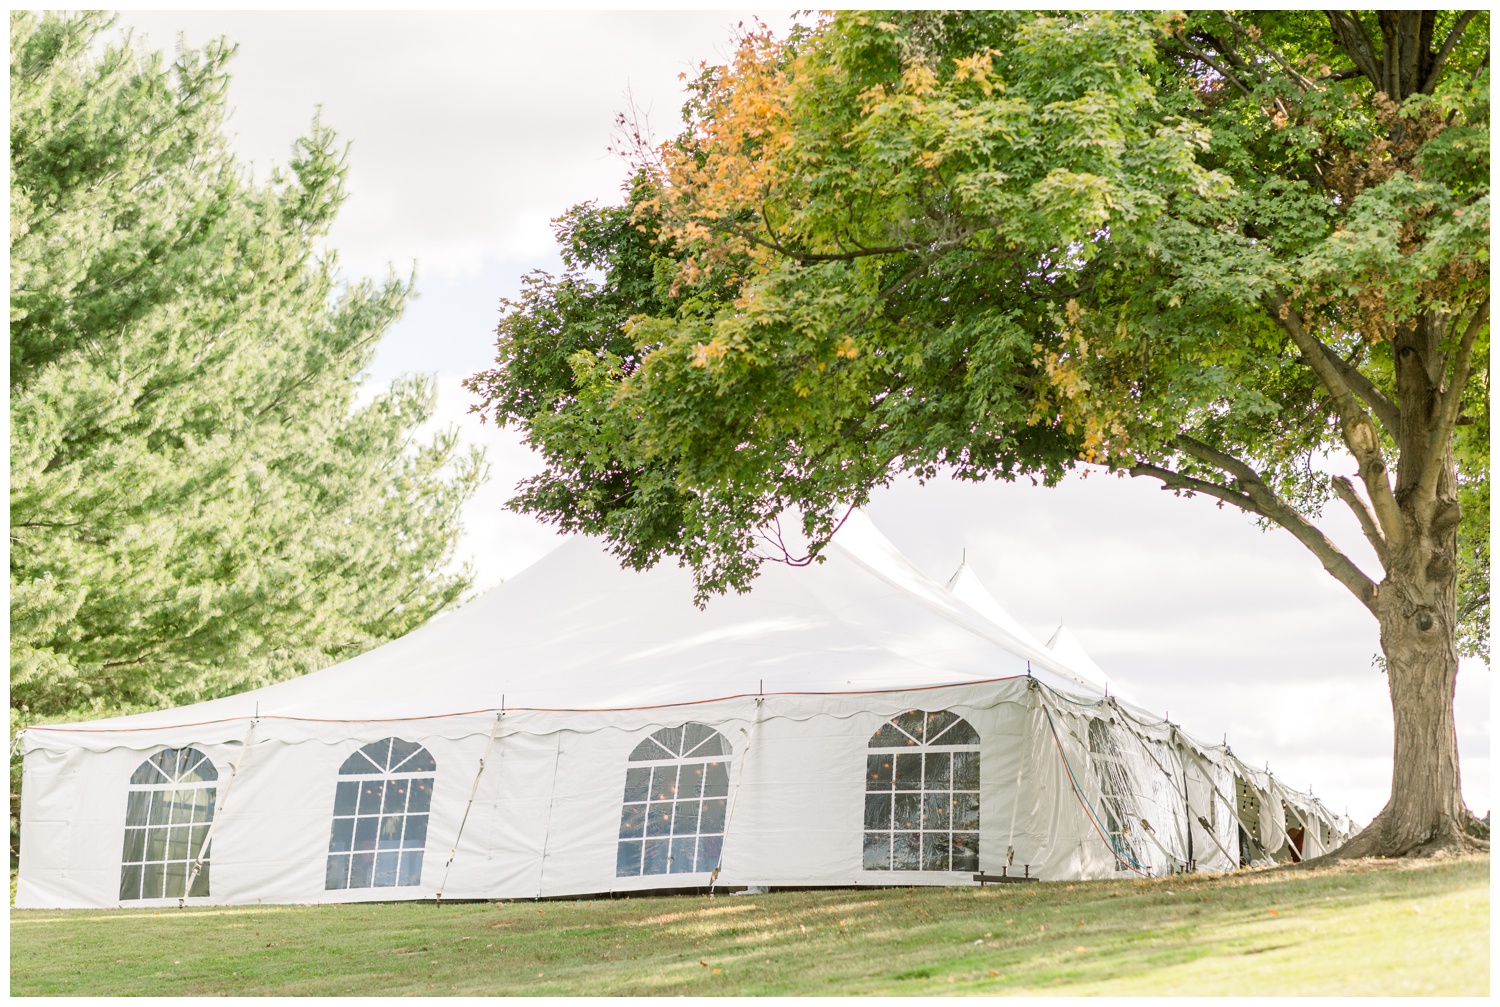 Backyard Wedding - Northern Kentucky Wedding - White Tent Reception